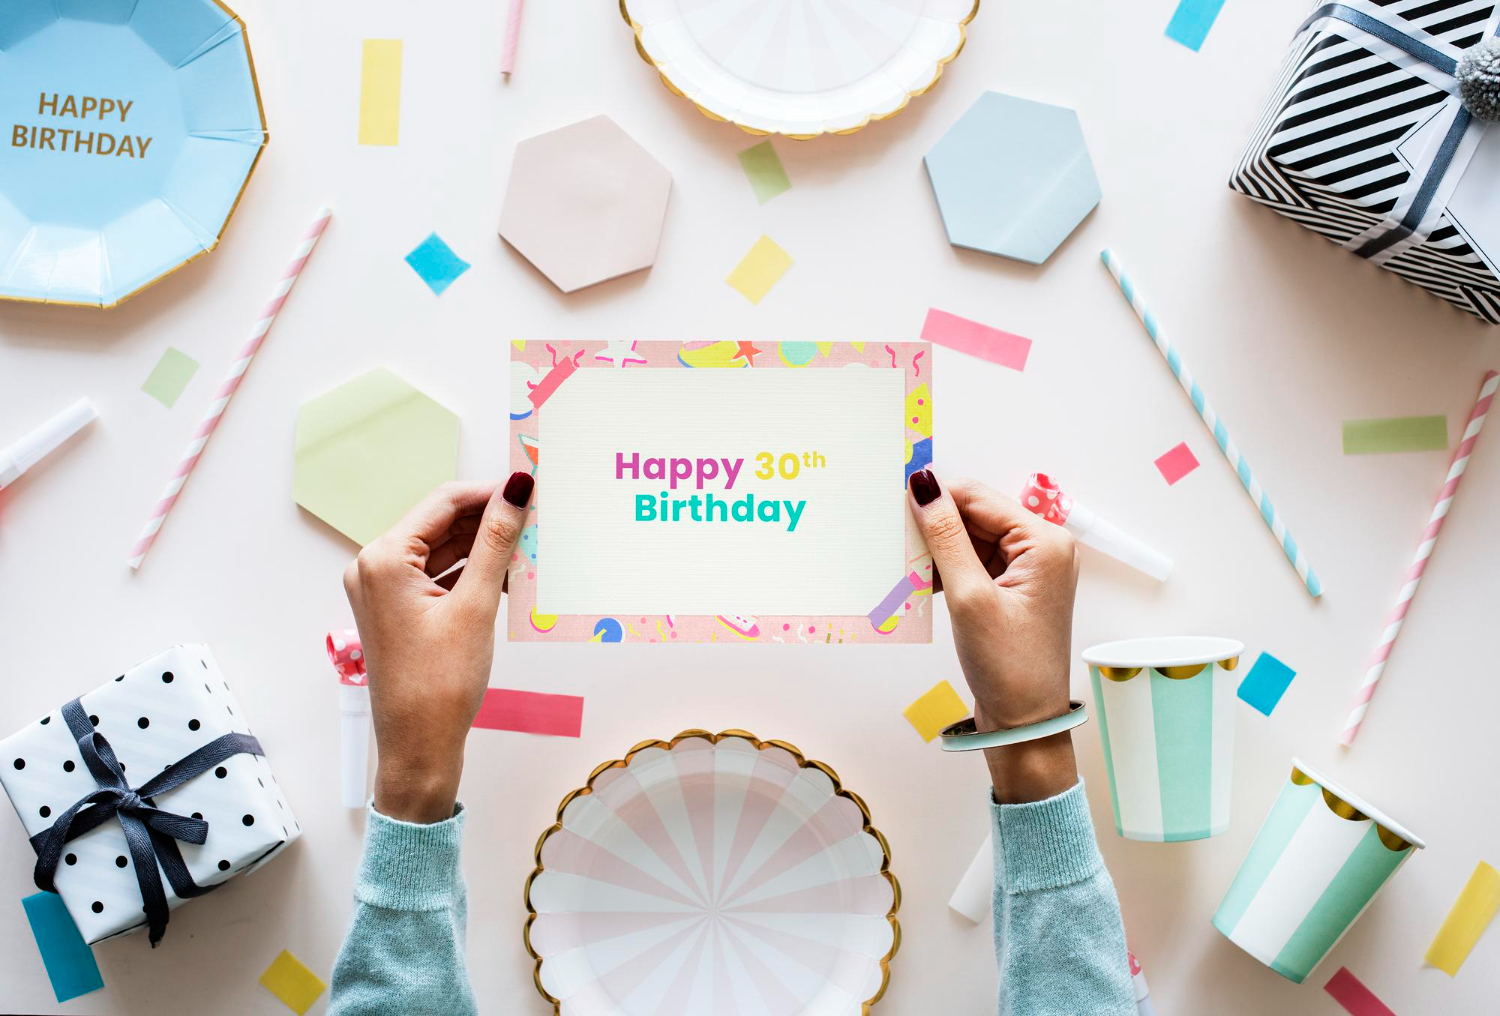 Sister-in-law Birthday Card Ideas